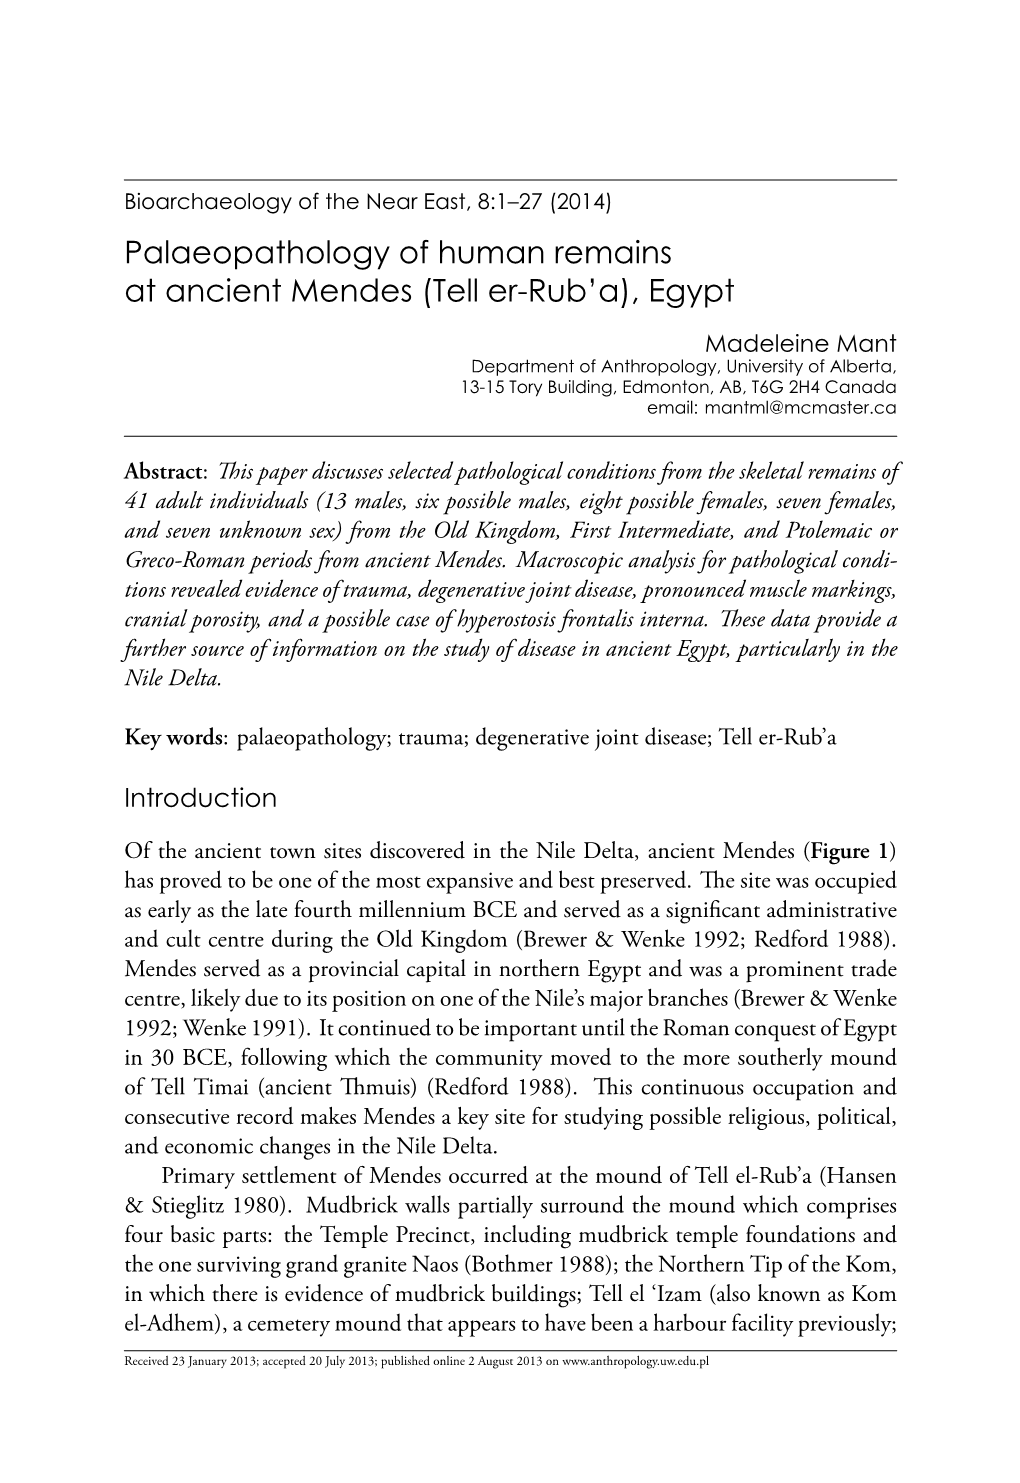 Palaeopathology of Human Remains at Ancient Mendes (Tell Er-Rub'a), Egypt